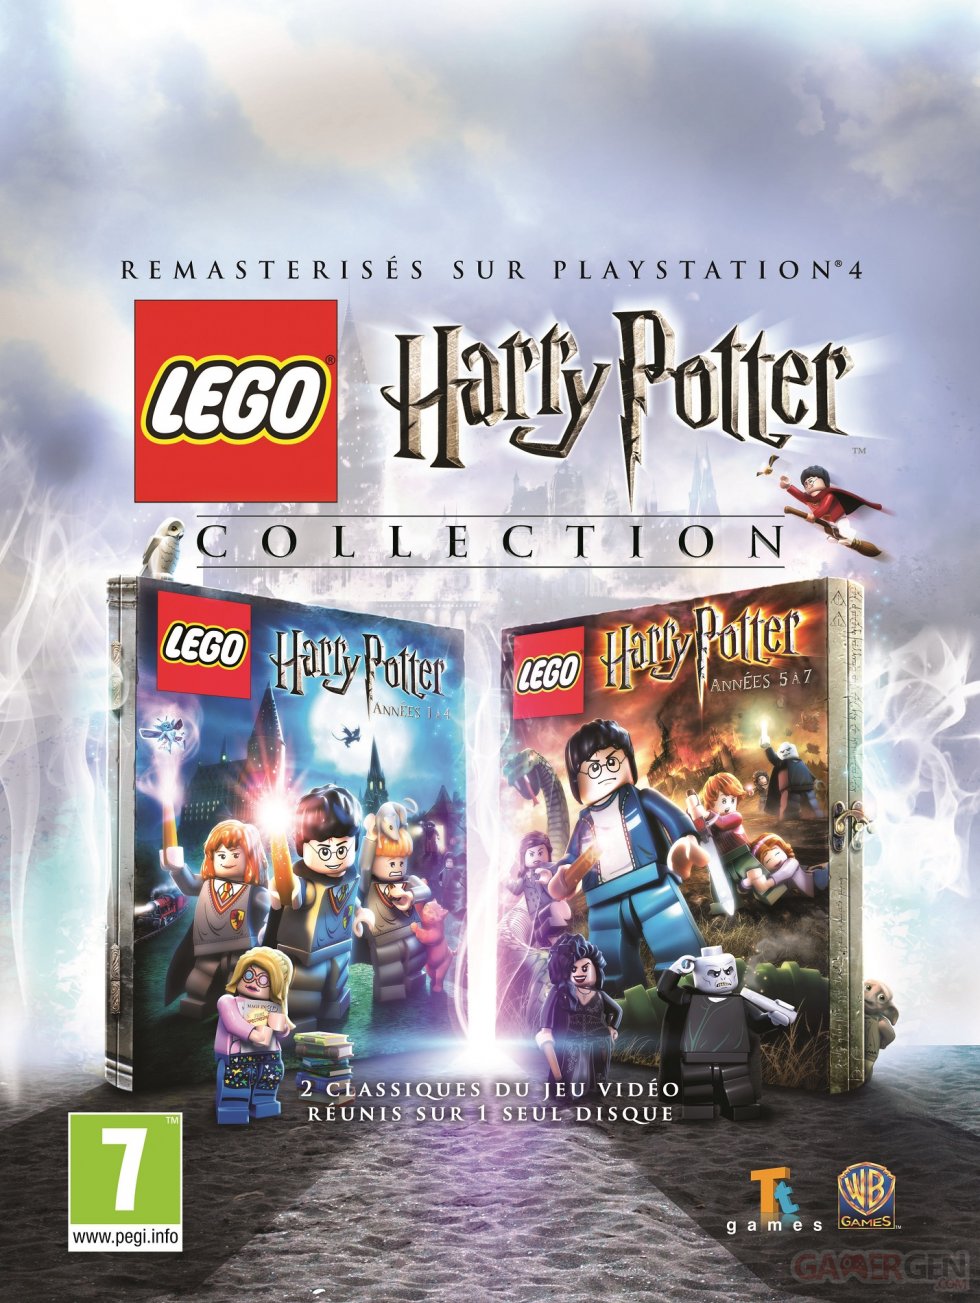 LEGO-Harry-Potter-Collection_KEY-ART